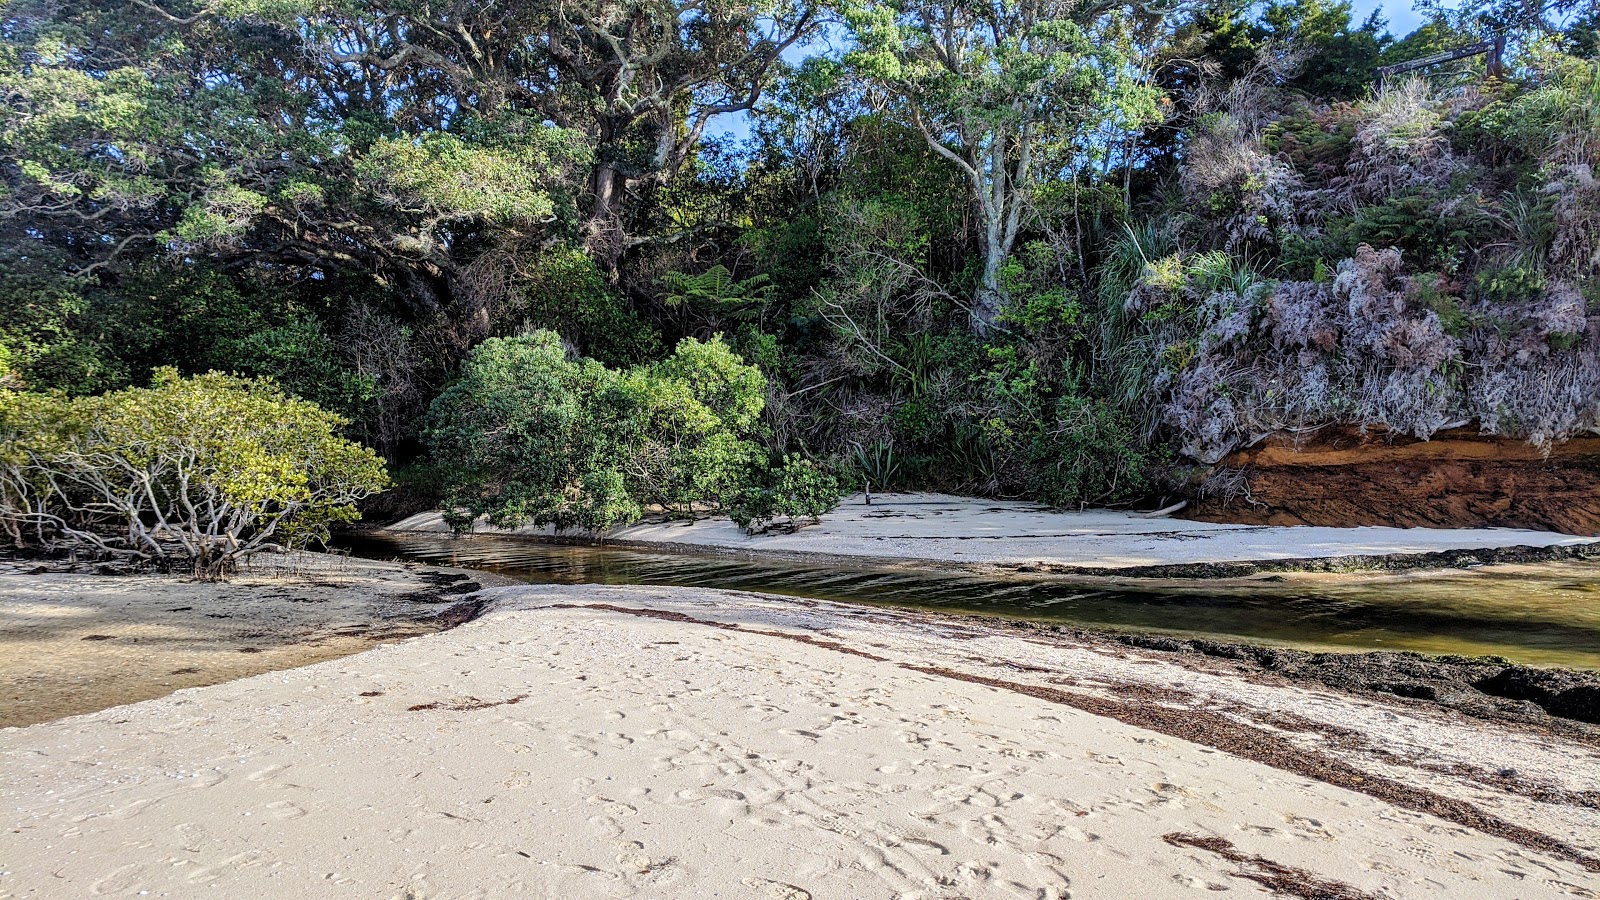 Fotografija Matakawau Beach nahaja se v naravnem okolju